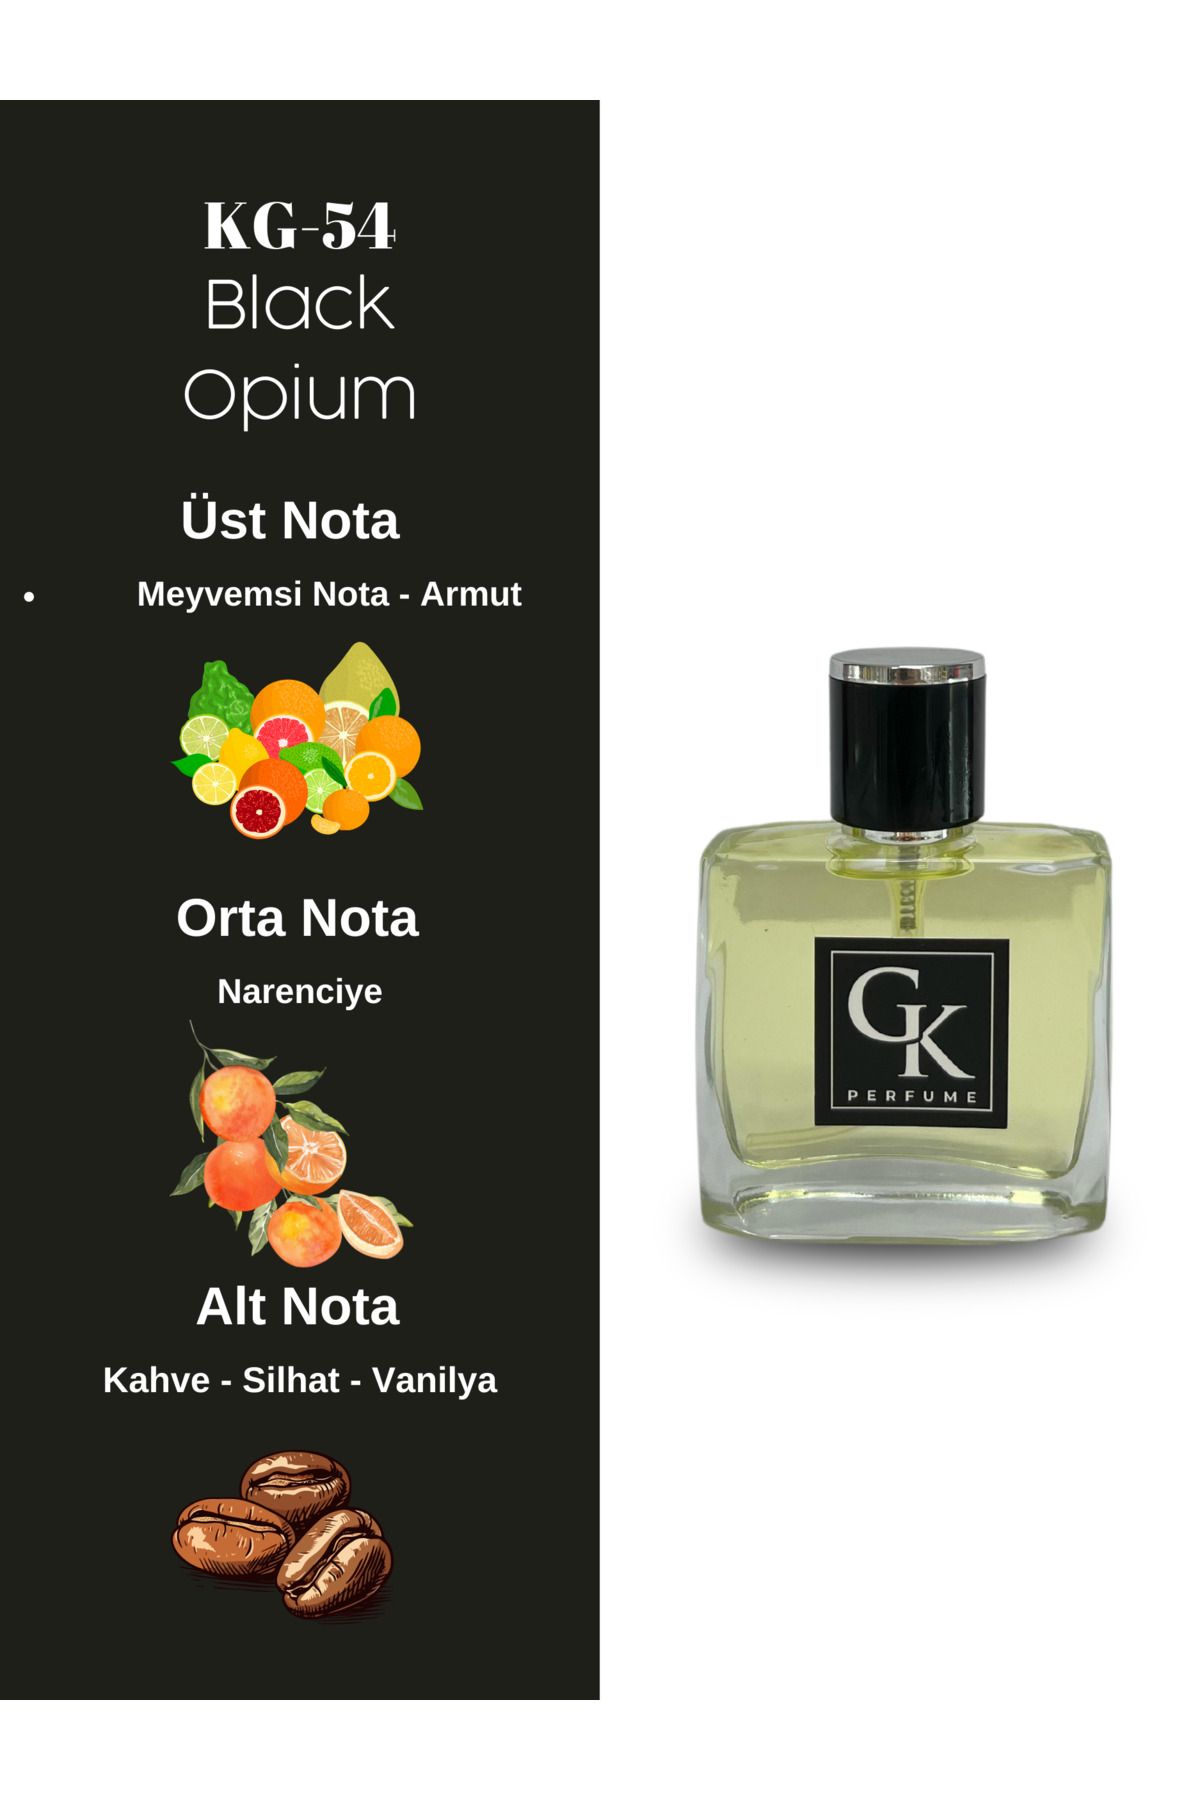 Gk Perfume Kg-54 (Black Opium) Parfüm